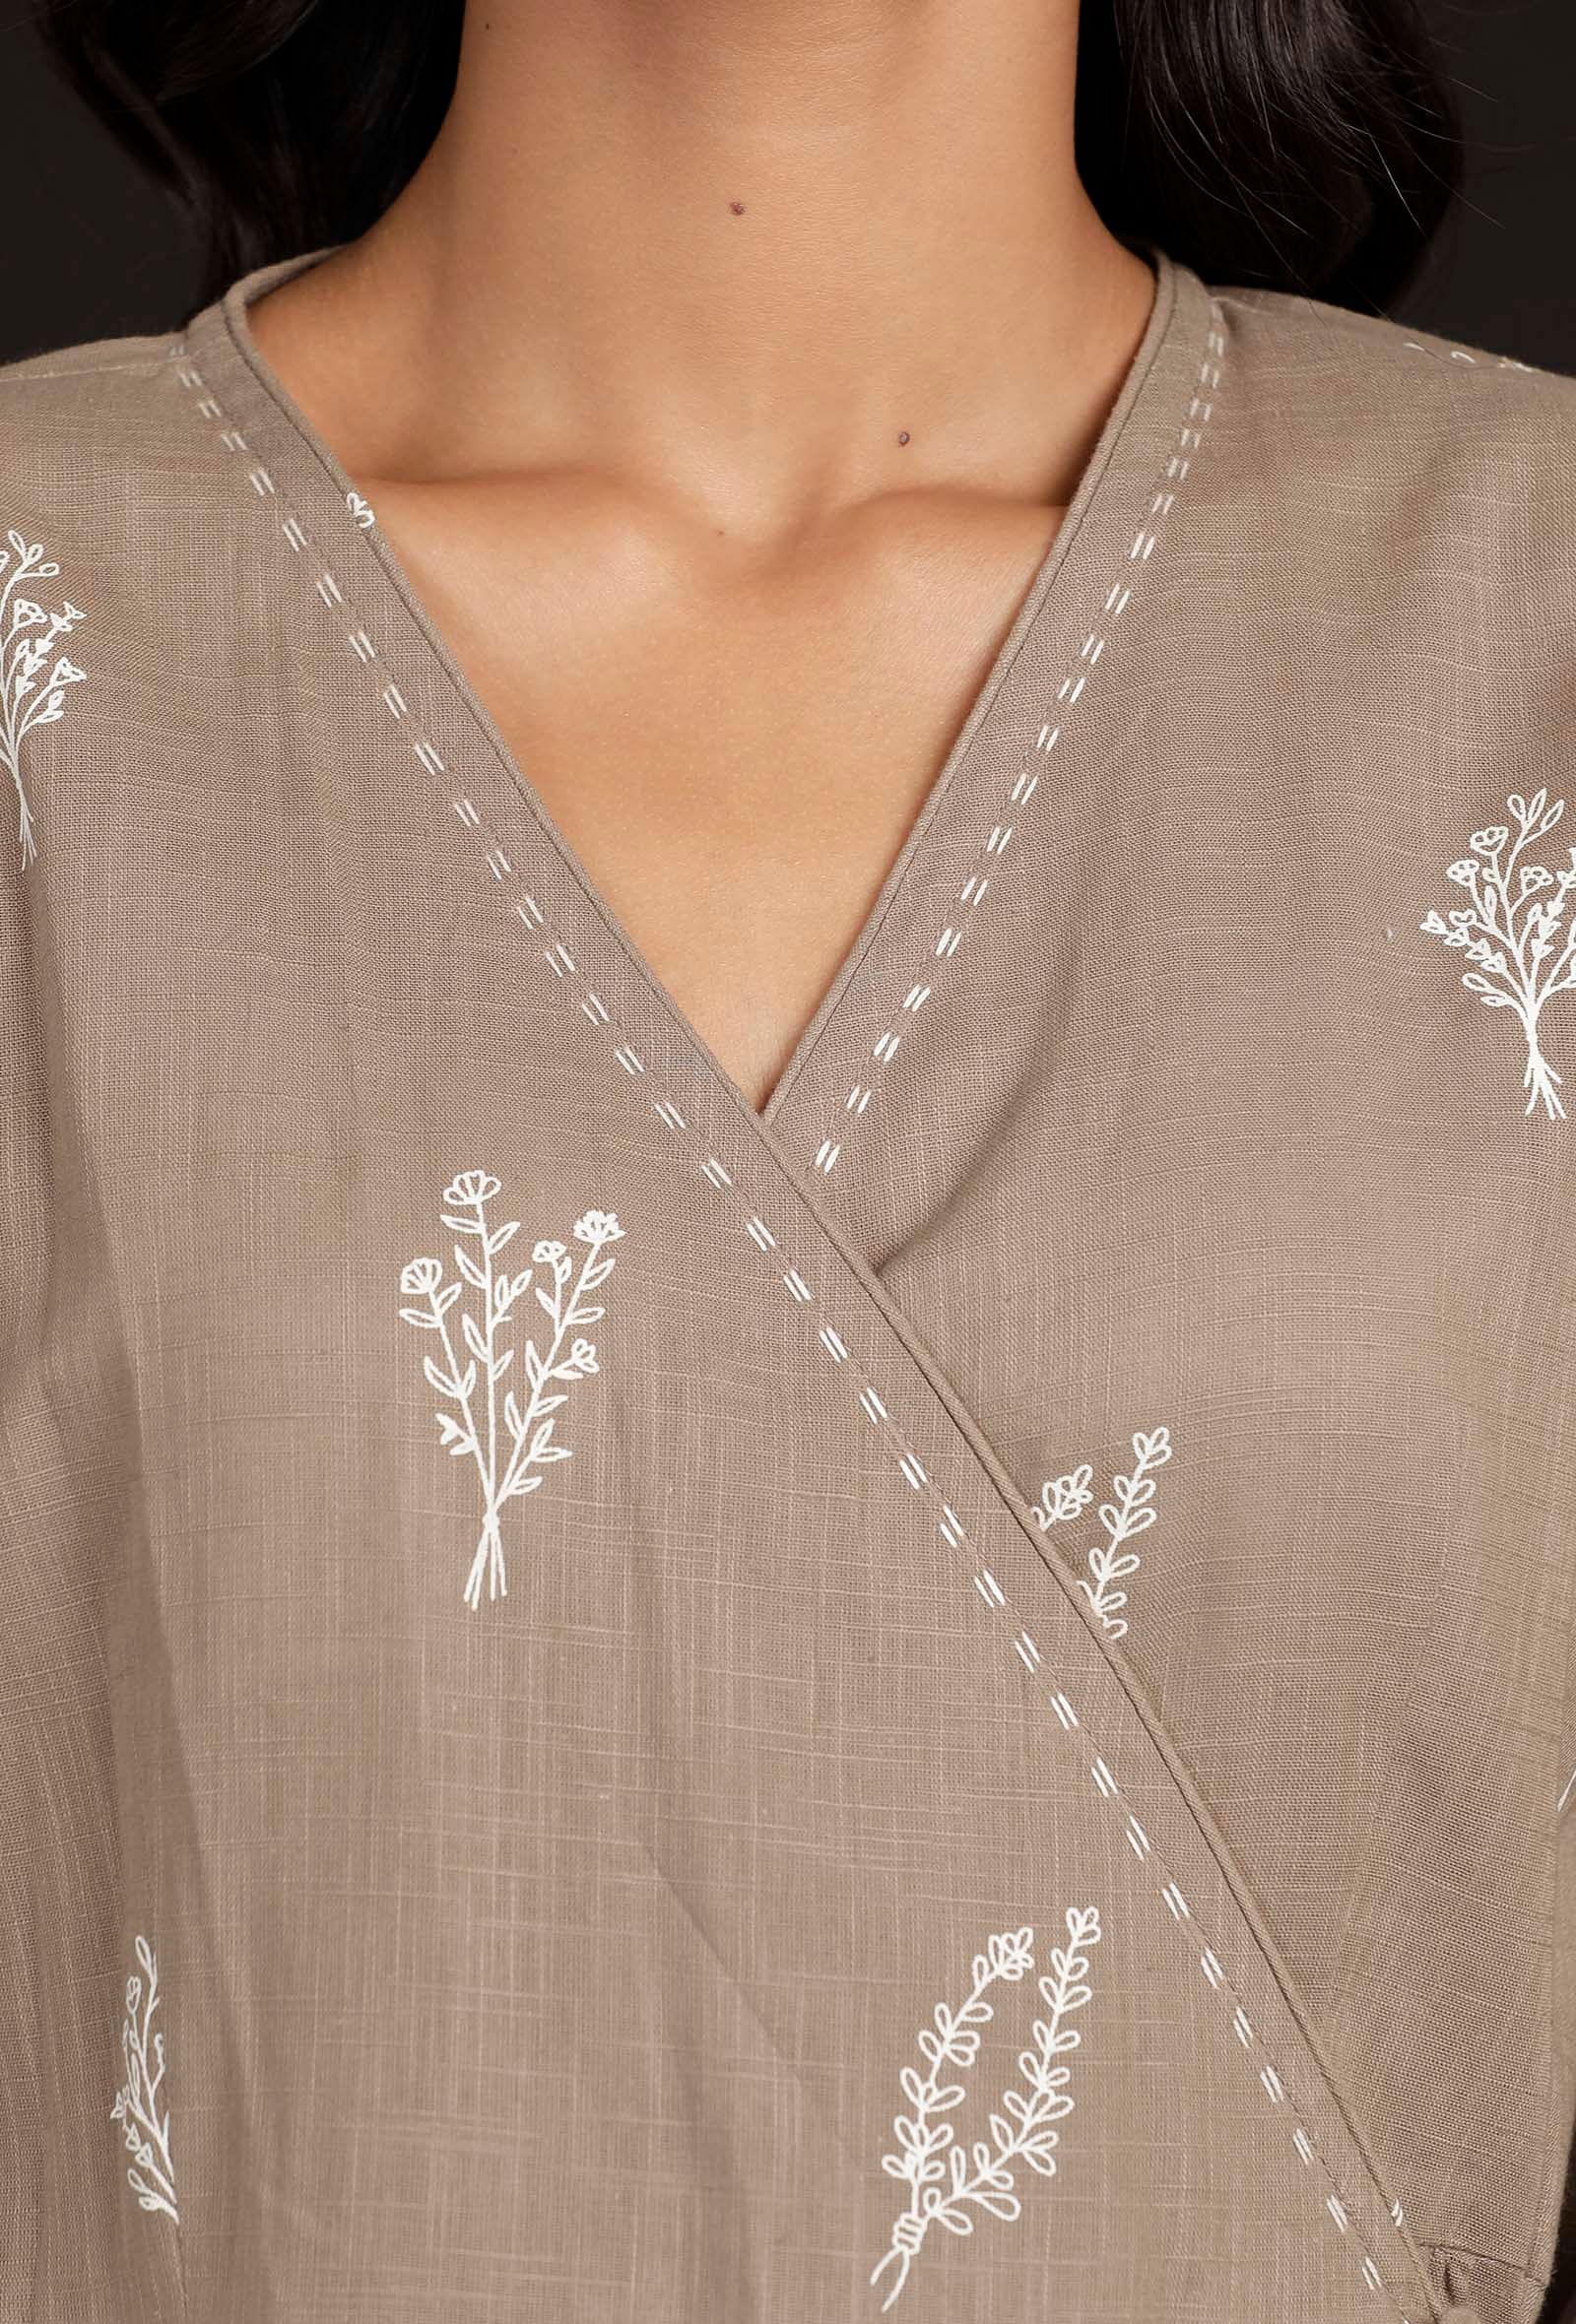 Okra Beige Block printed Angrakha Cotton Dress